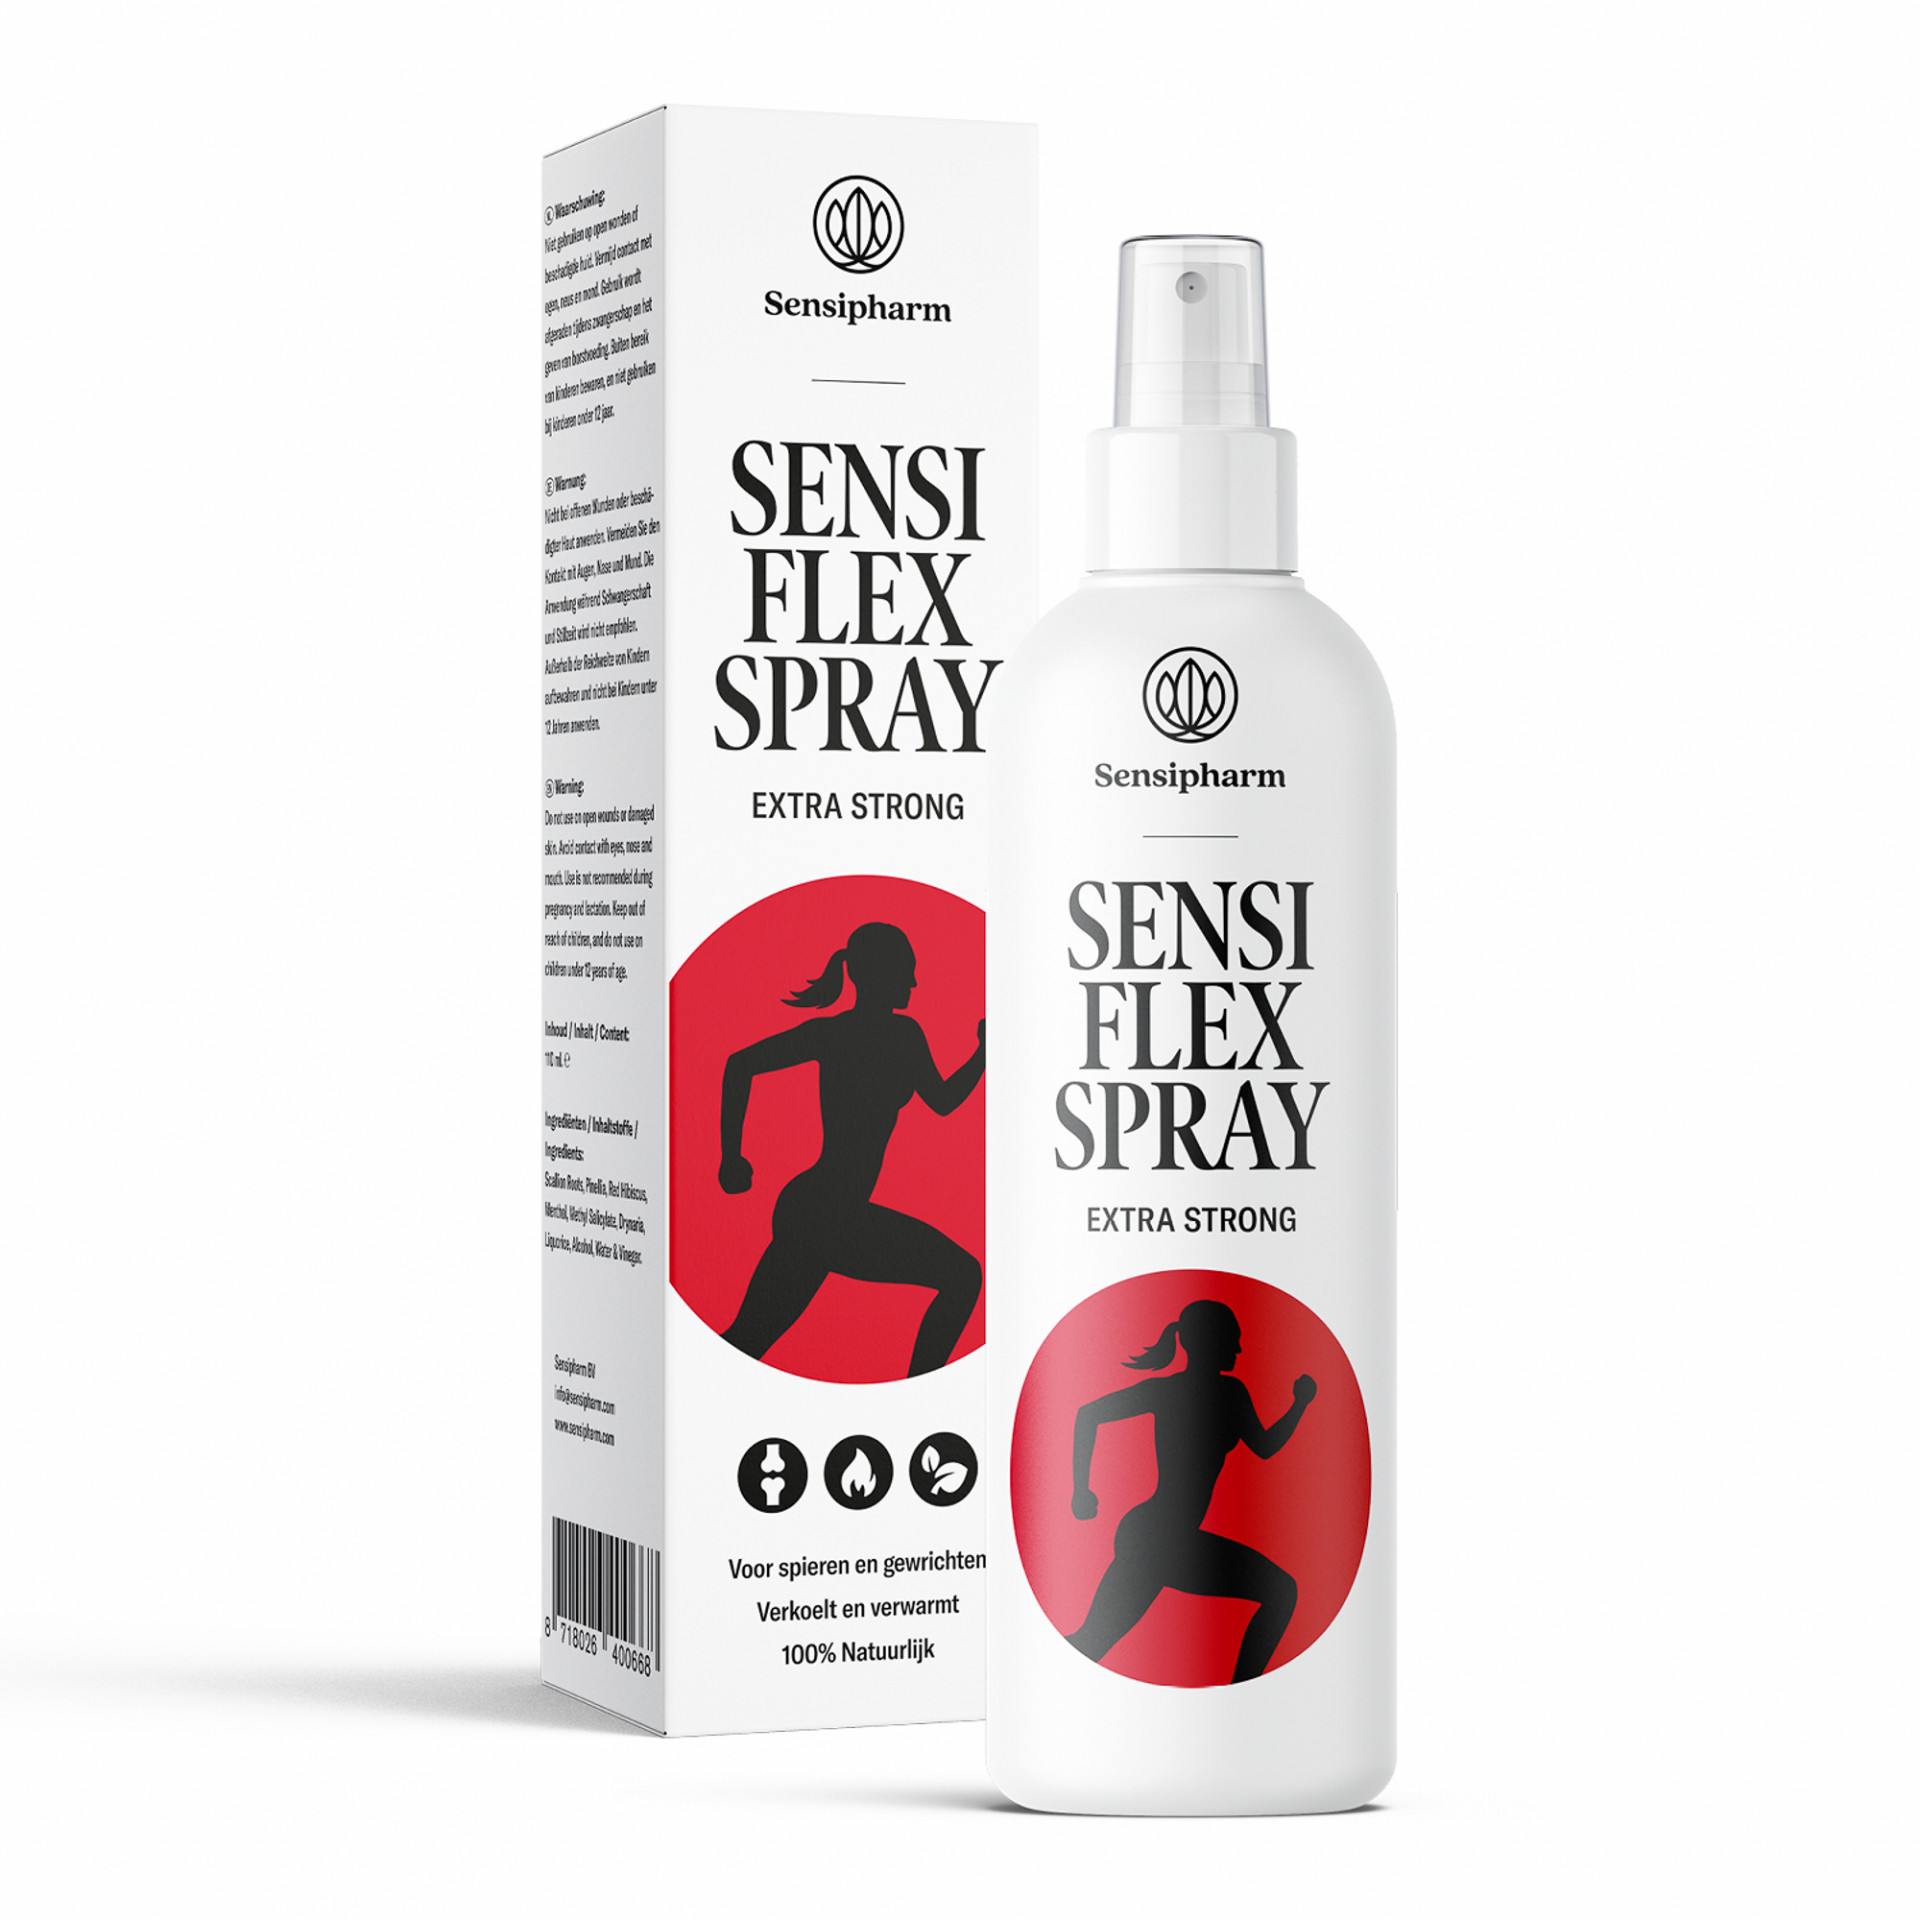 Sensipharm - Sensi Flex Spray - Extra Strong - 110ml